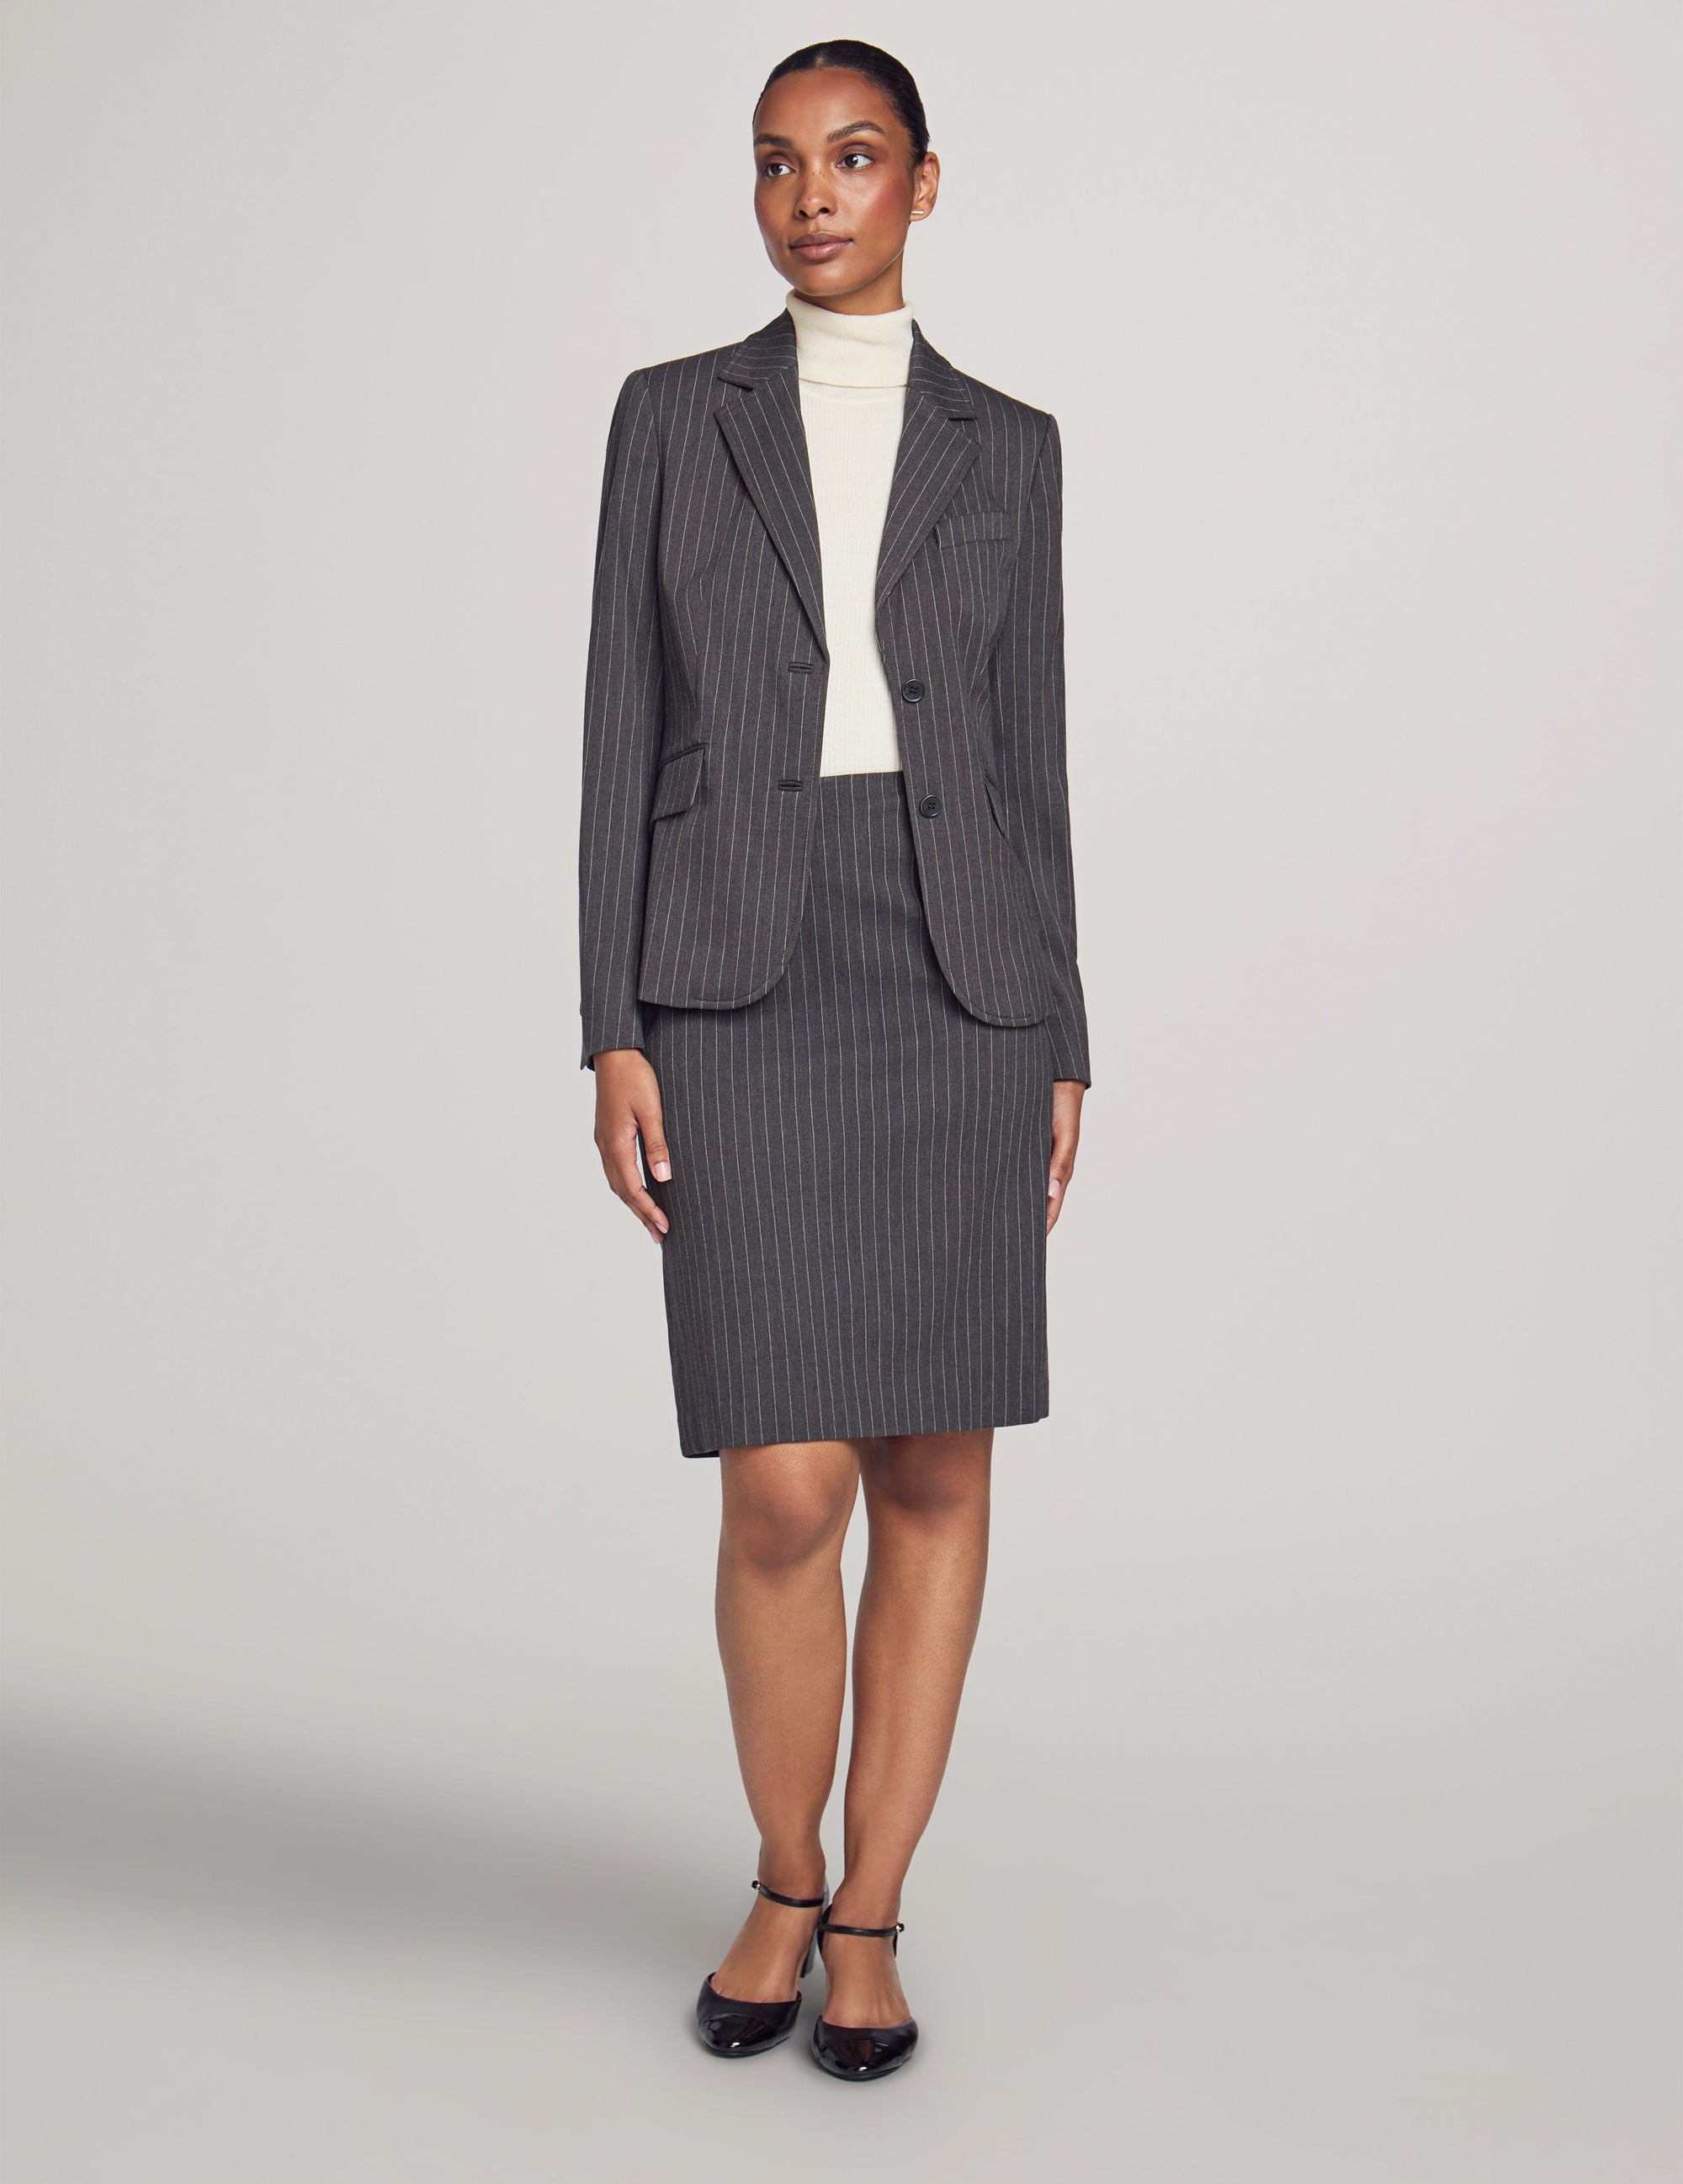 New Ladies Anne Klein Suit. 6P US, 10P Aus - Women's Clothing